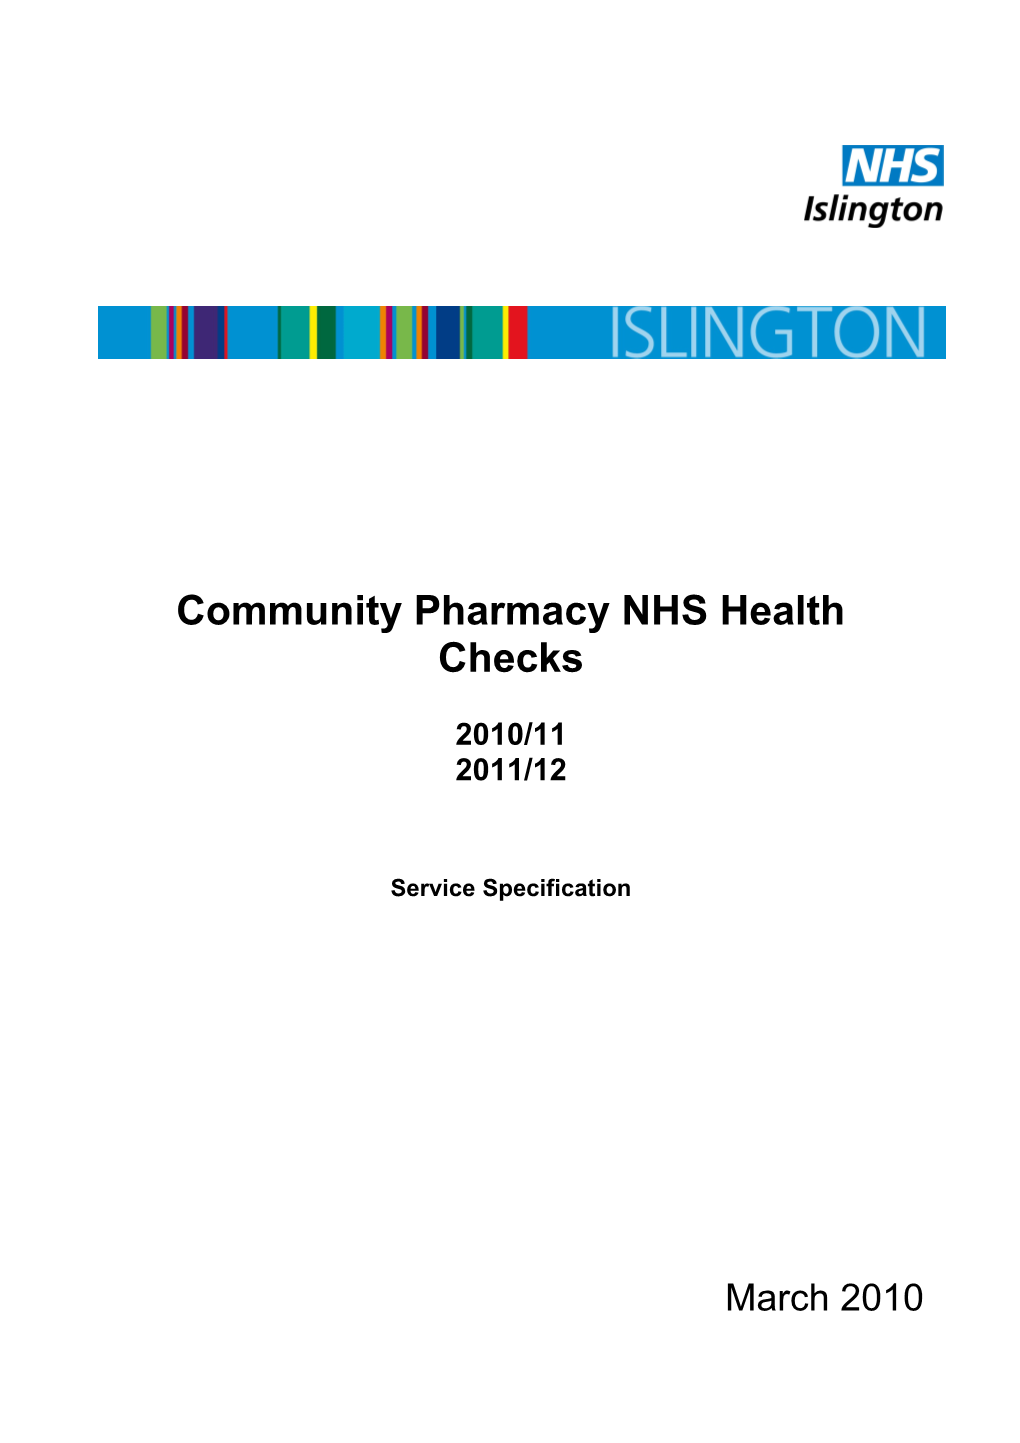 Community Pharmacy NHS Health Checks